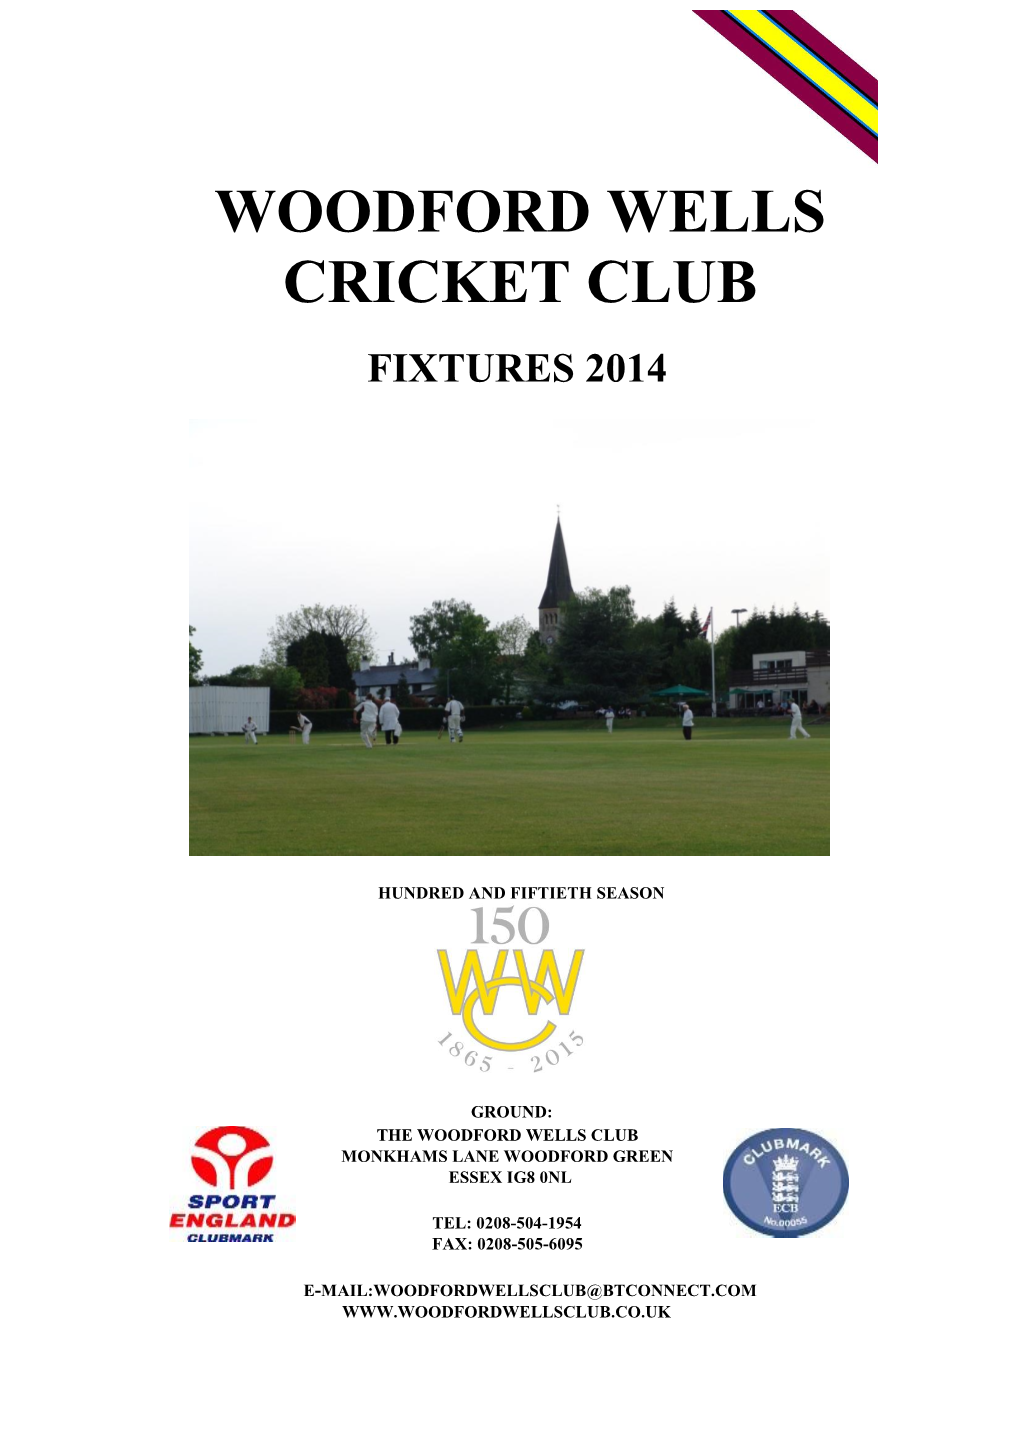 Woodford Wells Cricket Club